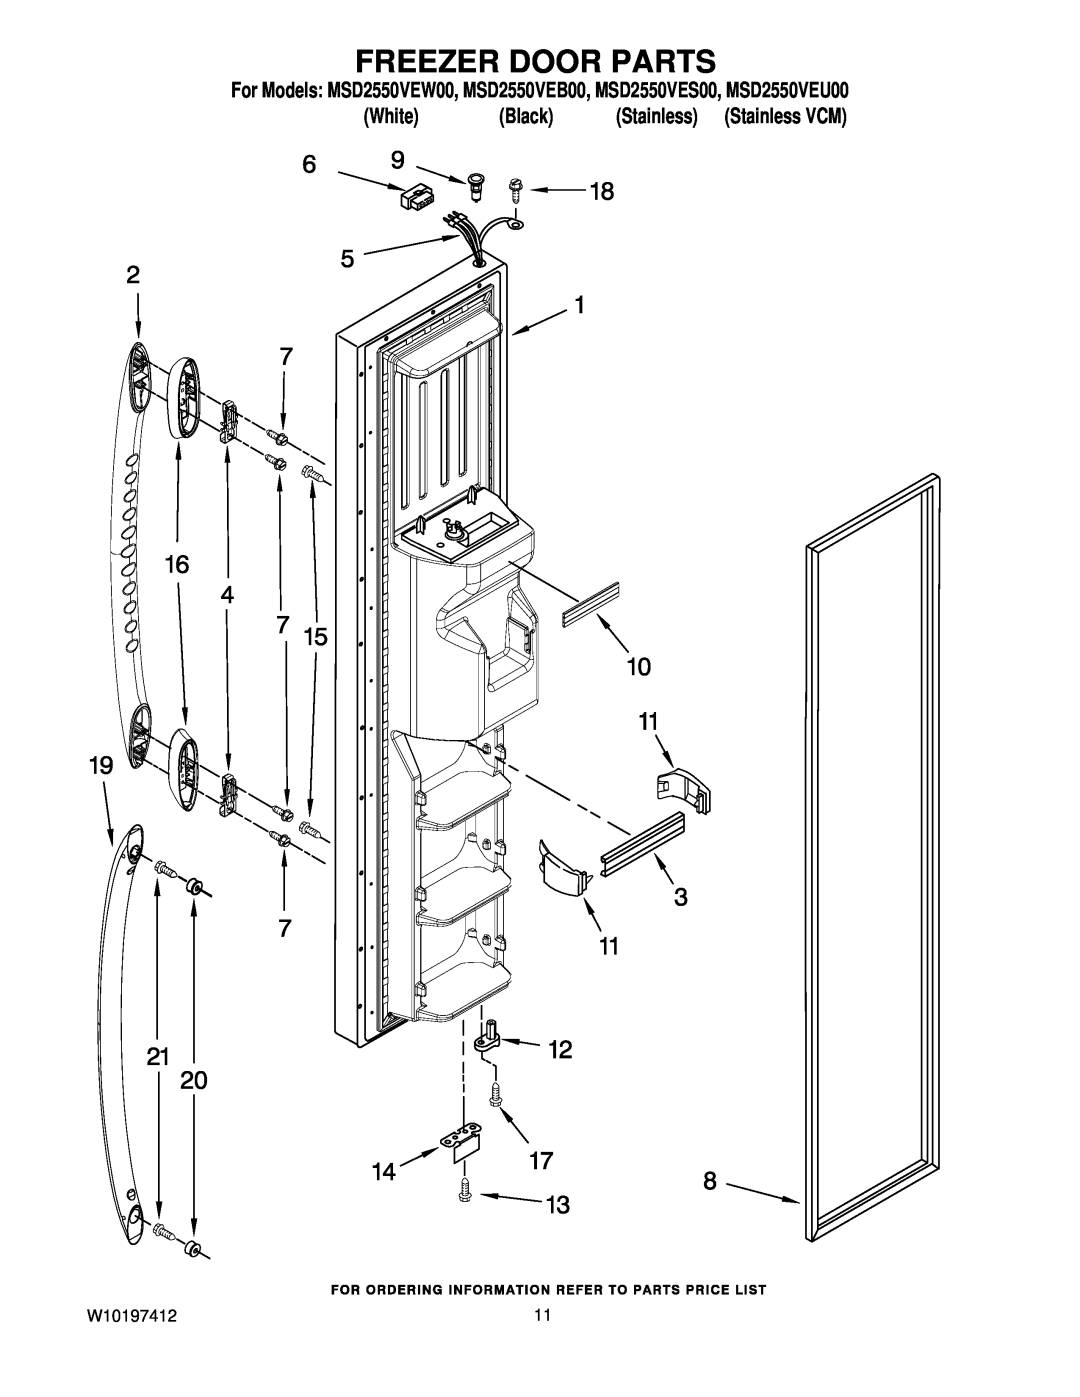 Maytag manual Freezer Door Parts, For Models MSD2550VEW00, MSD2550VEB00, MSD2550VES00, MSD2550VEU00, White, Black 